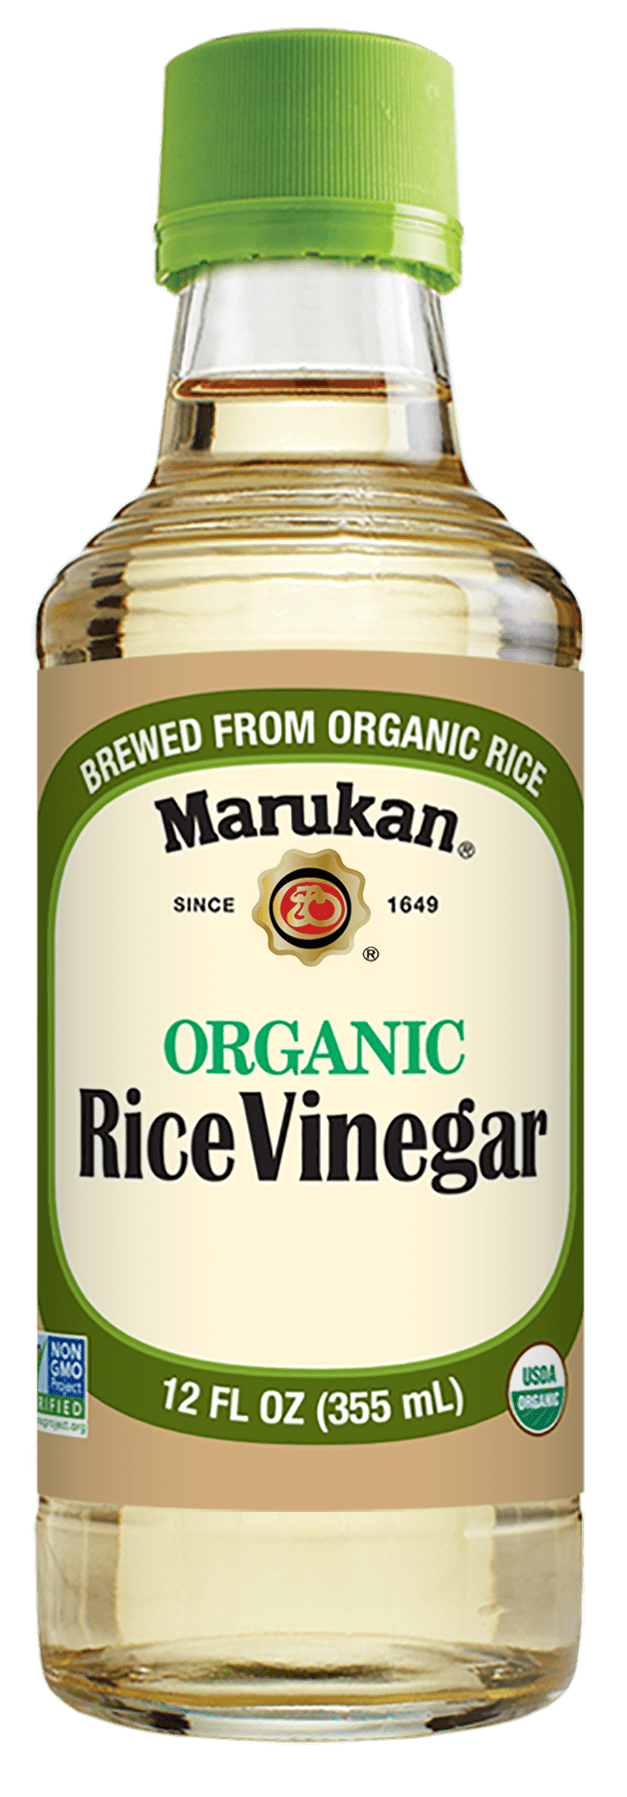 Organic Rice Vinegar - 12 FO